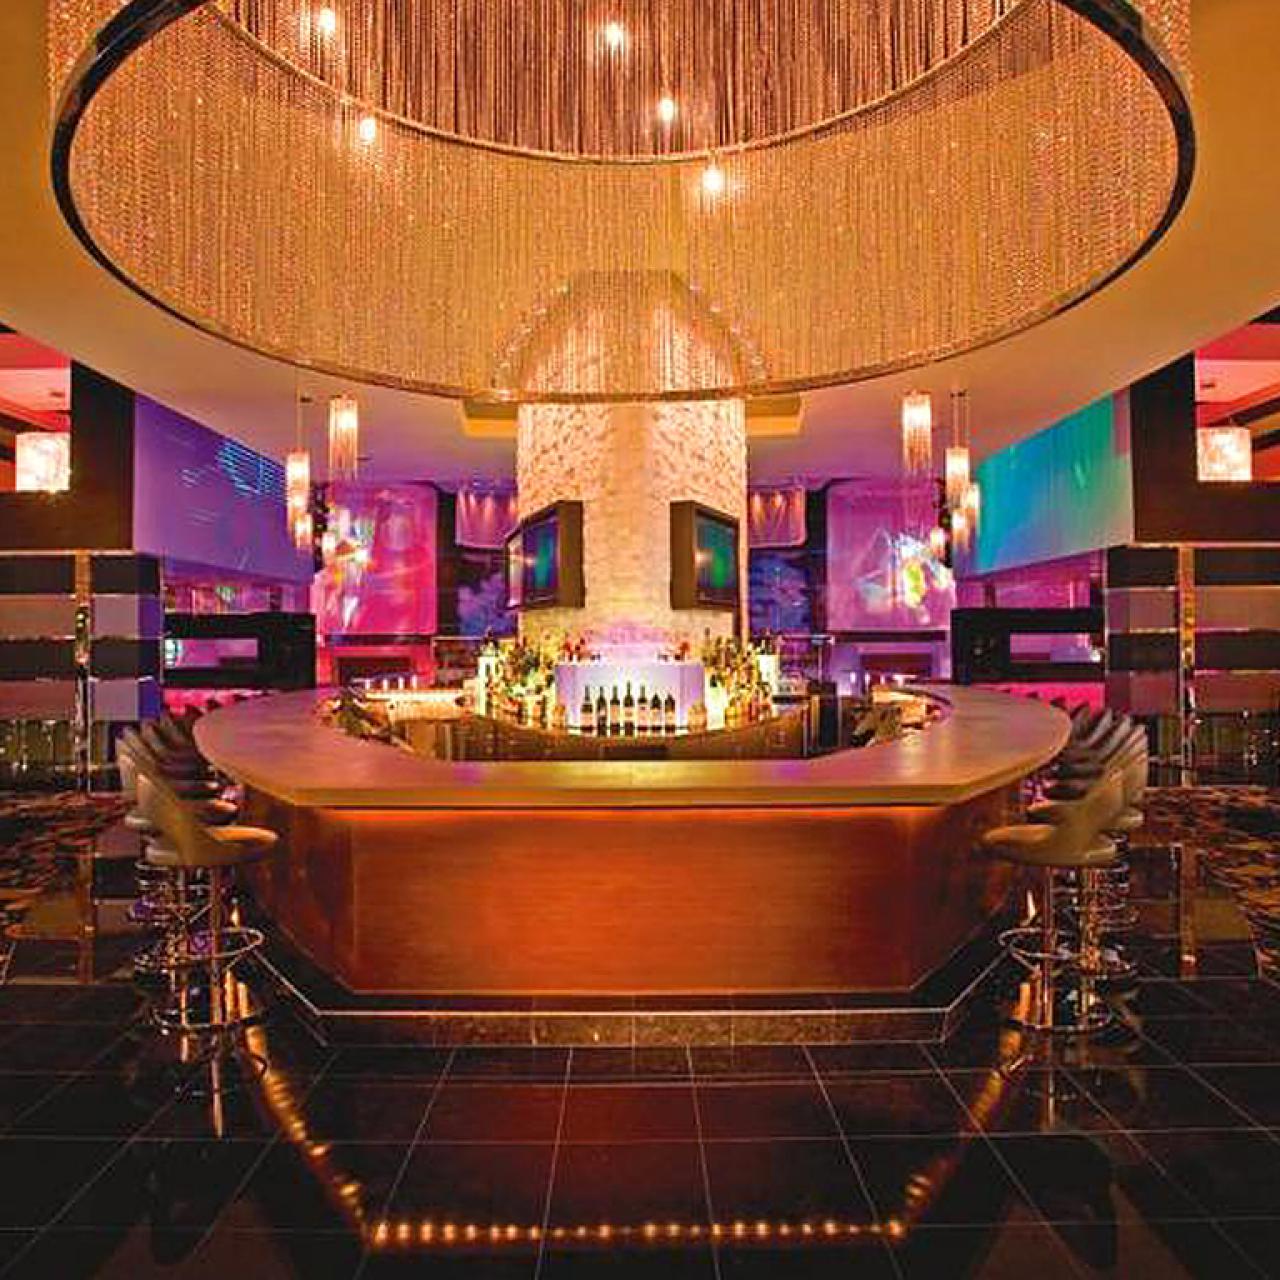 Luxor Hotel and Casino's new lighting feature illuminates the Las